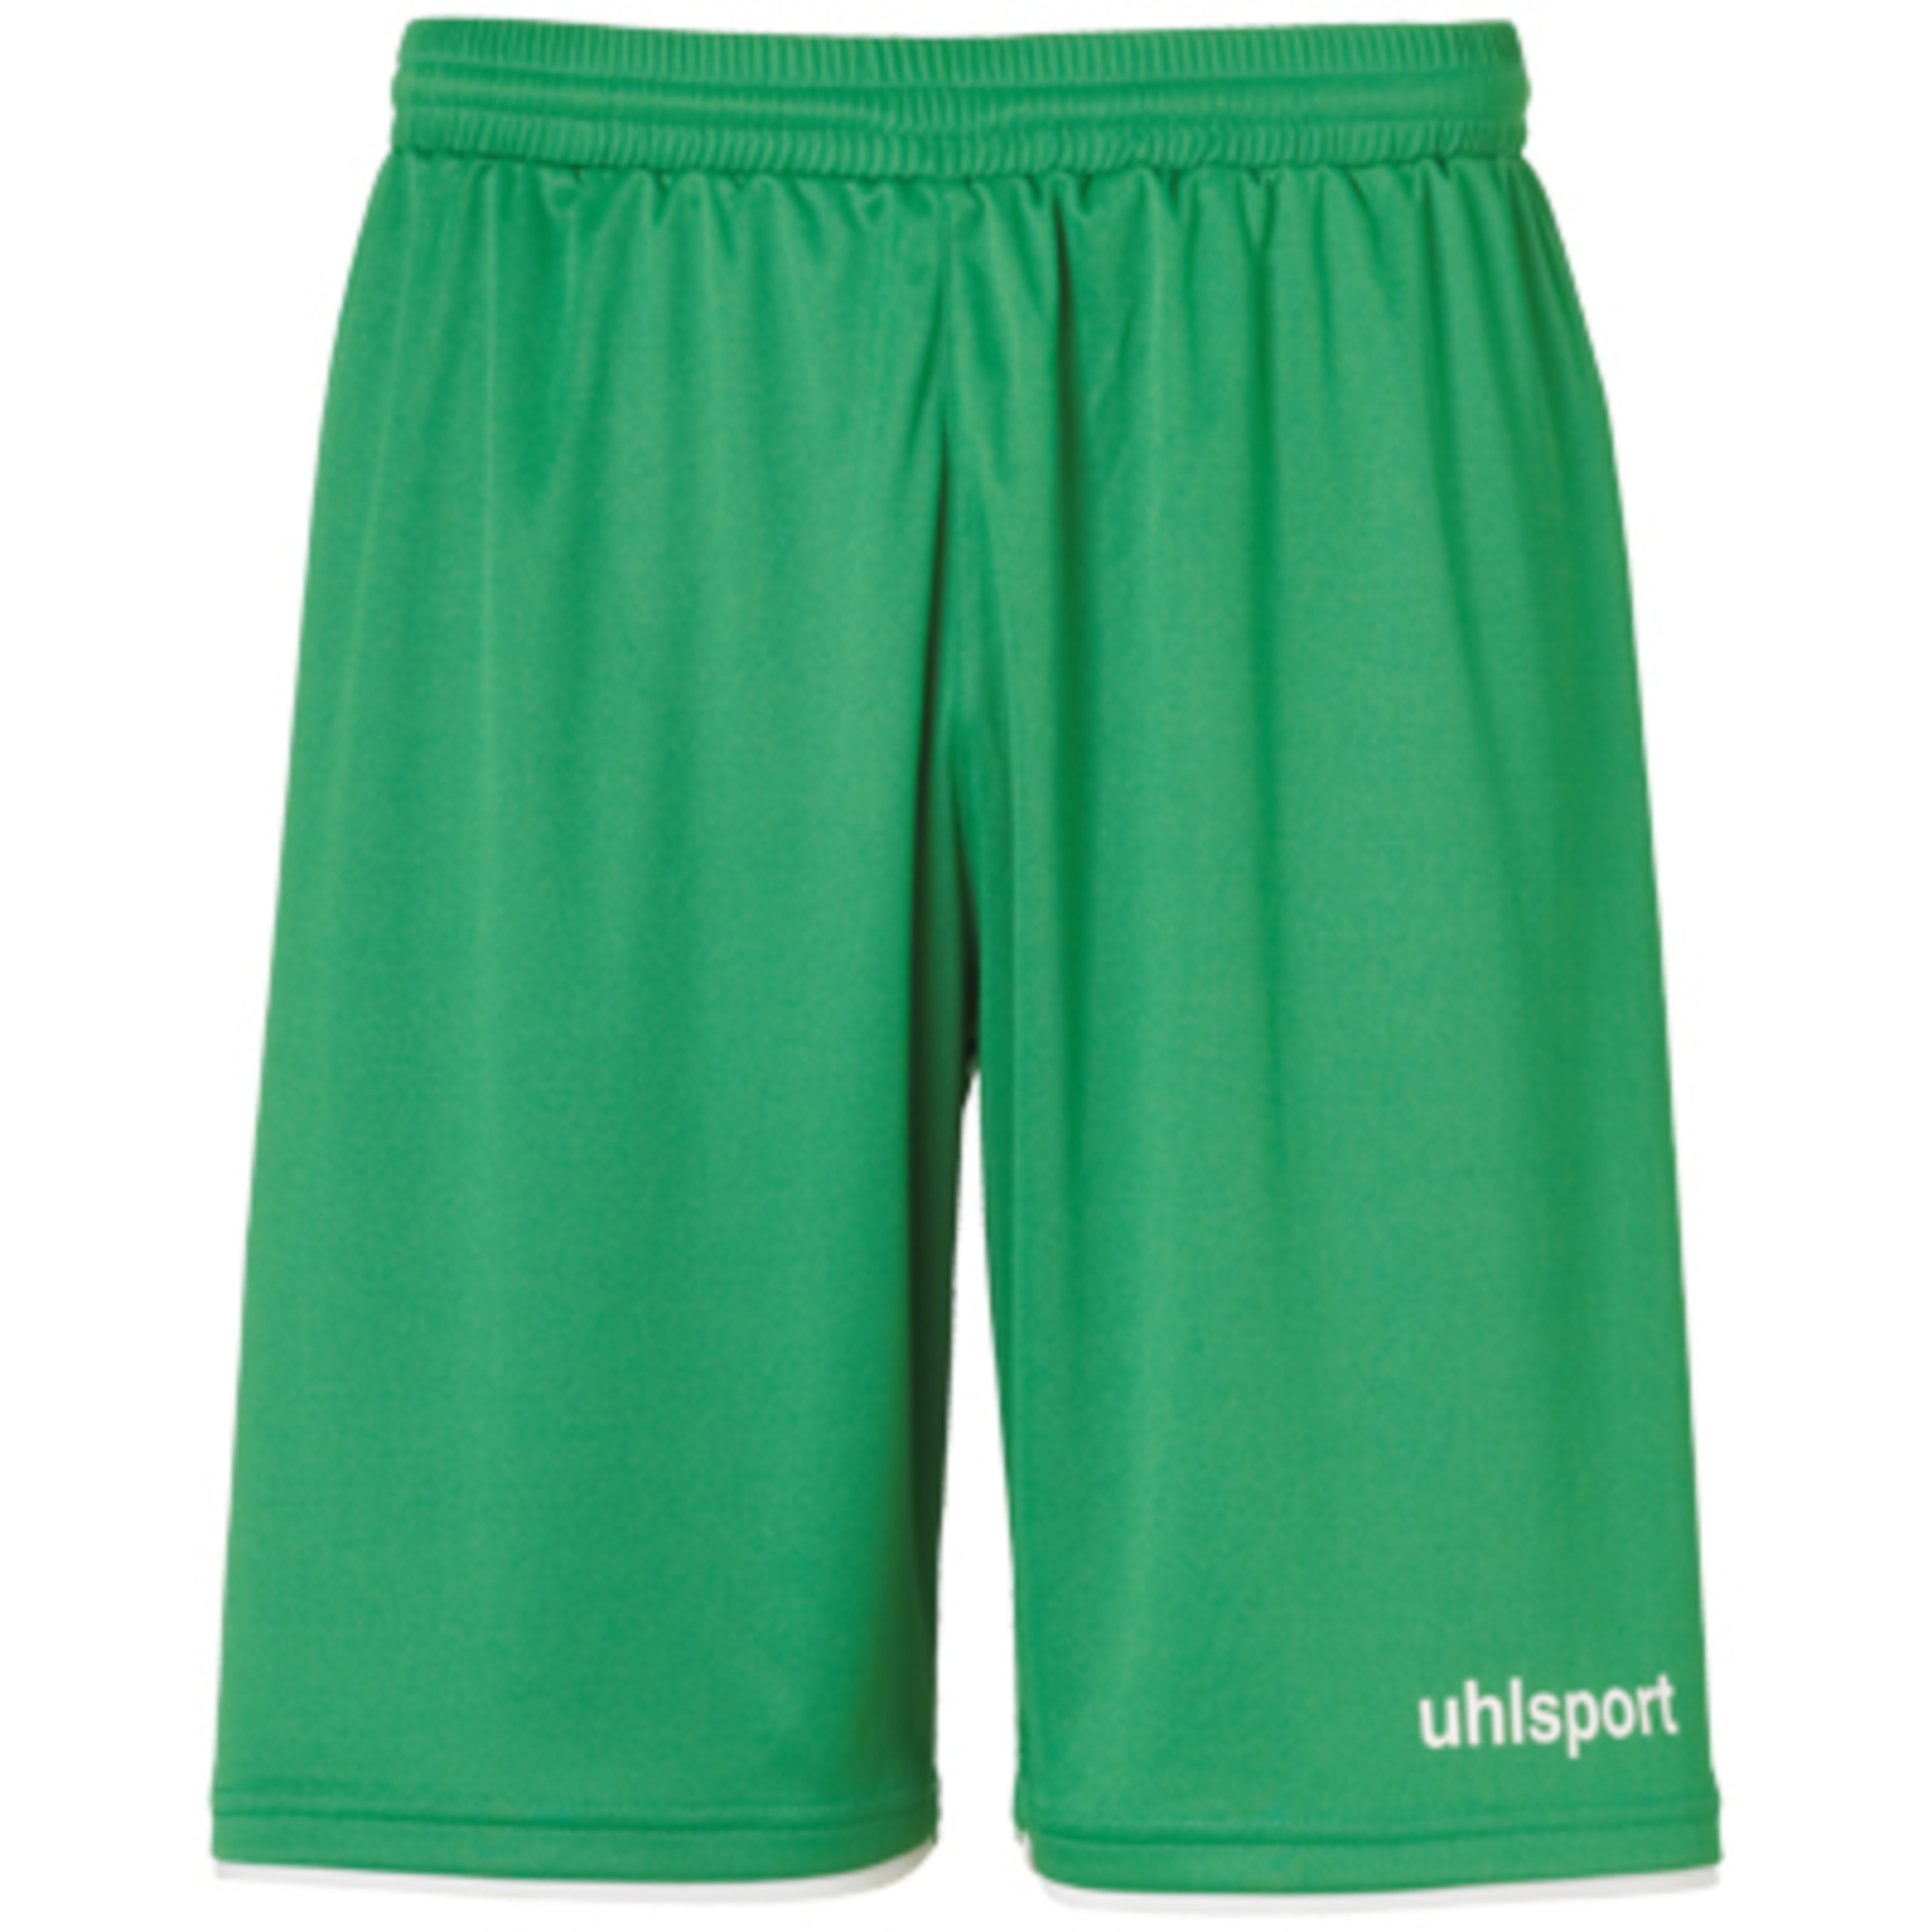 Club Shorts Verde/blanco Uhlsport - blanco-verde - 